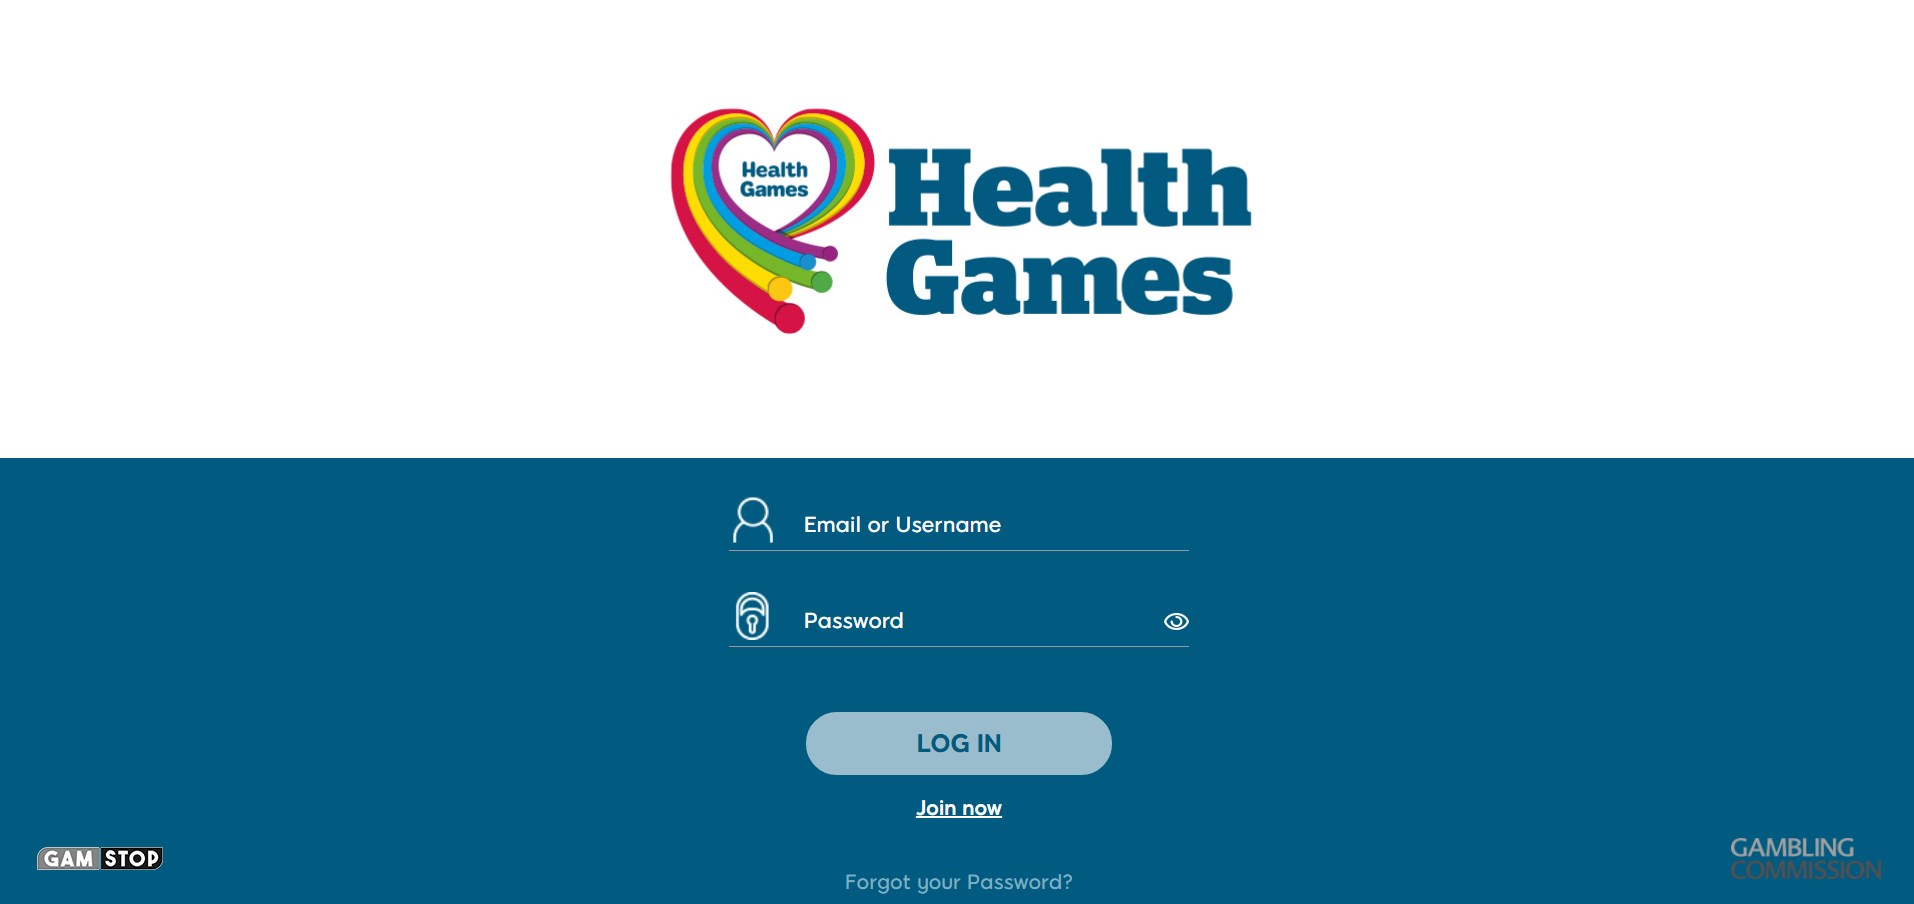 Health Games Casino Login